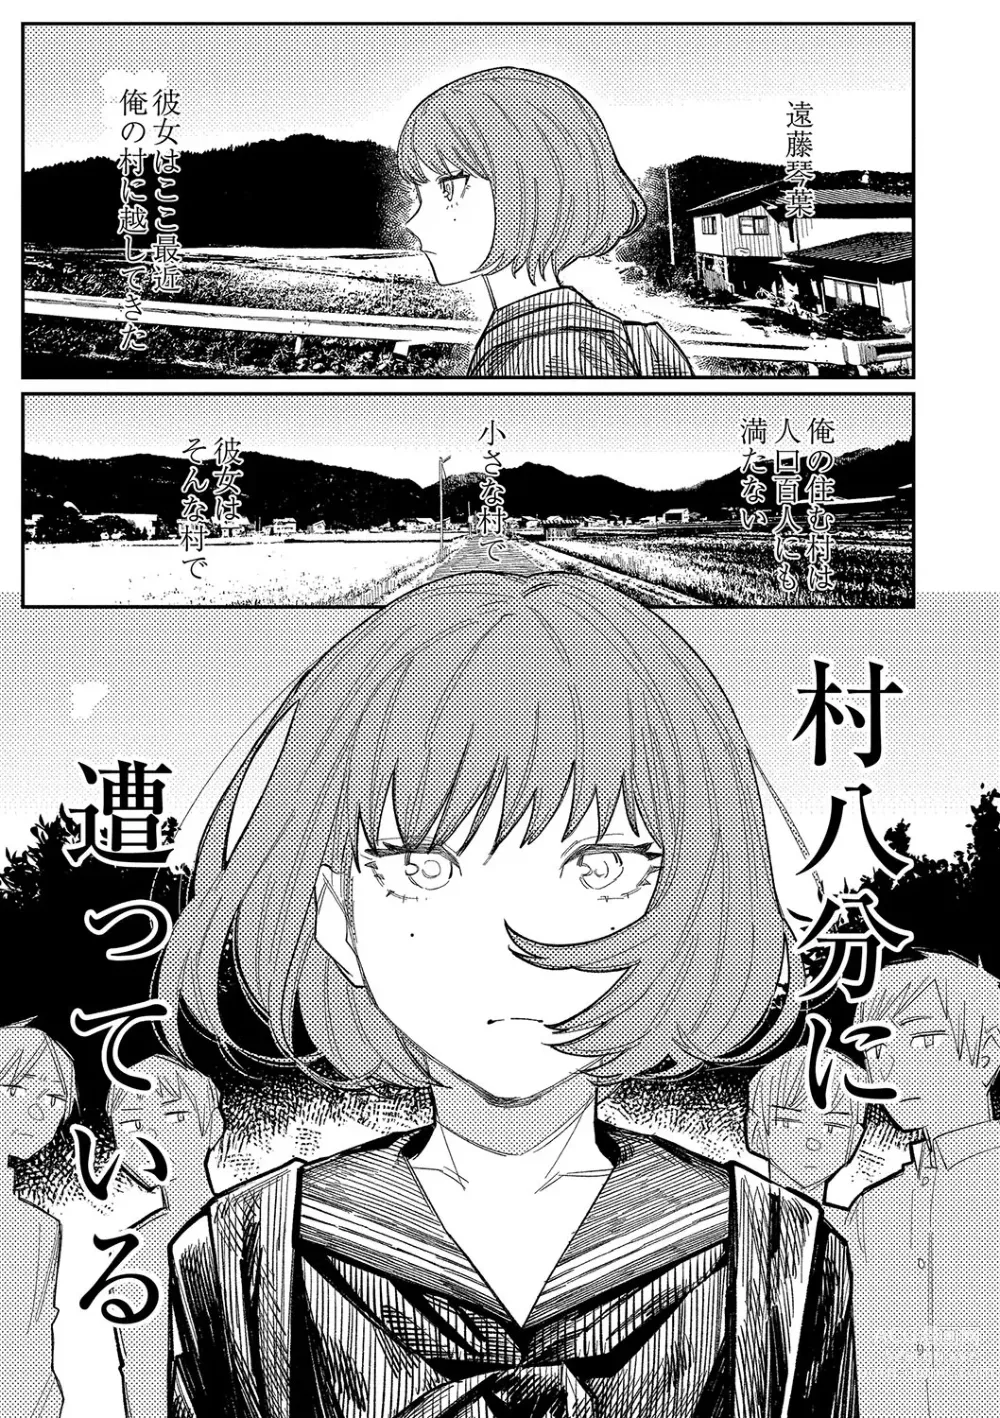 Page 4 of manga Oyasumi, Teen - Good Night, Goodbye